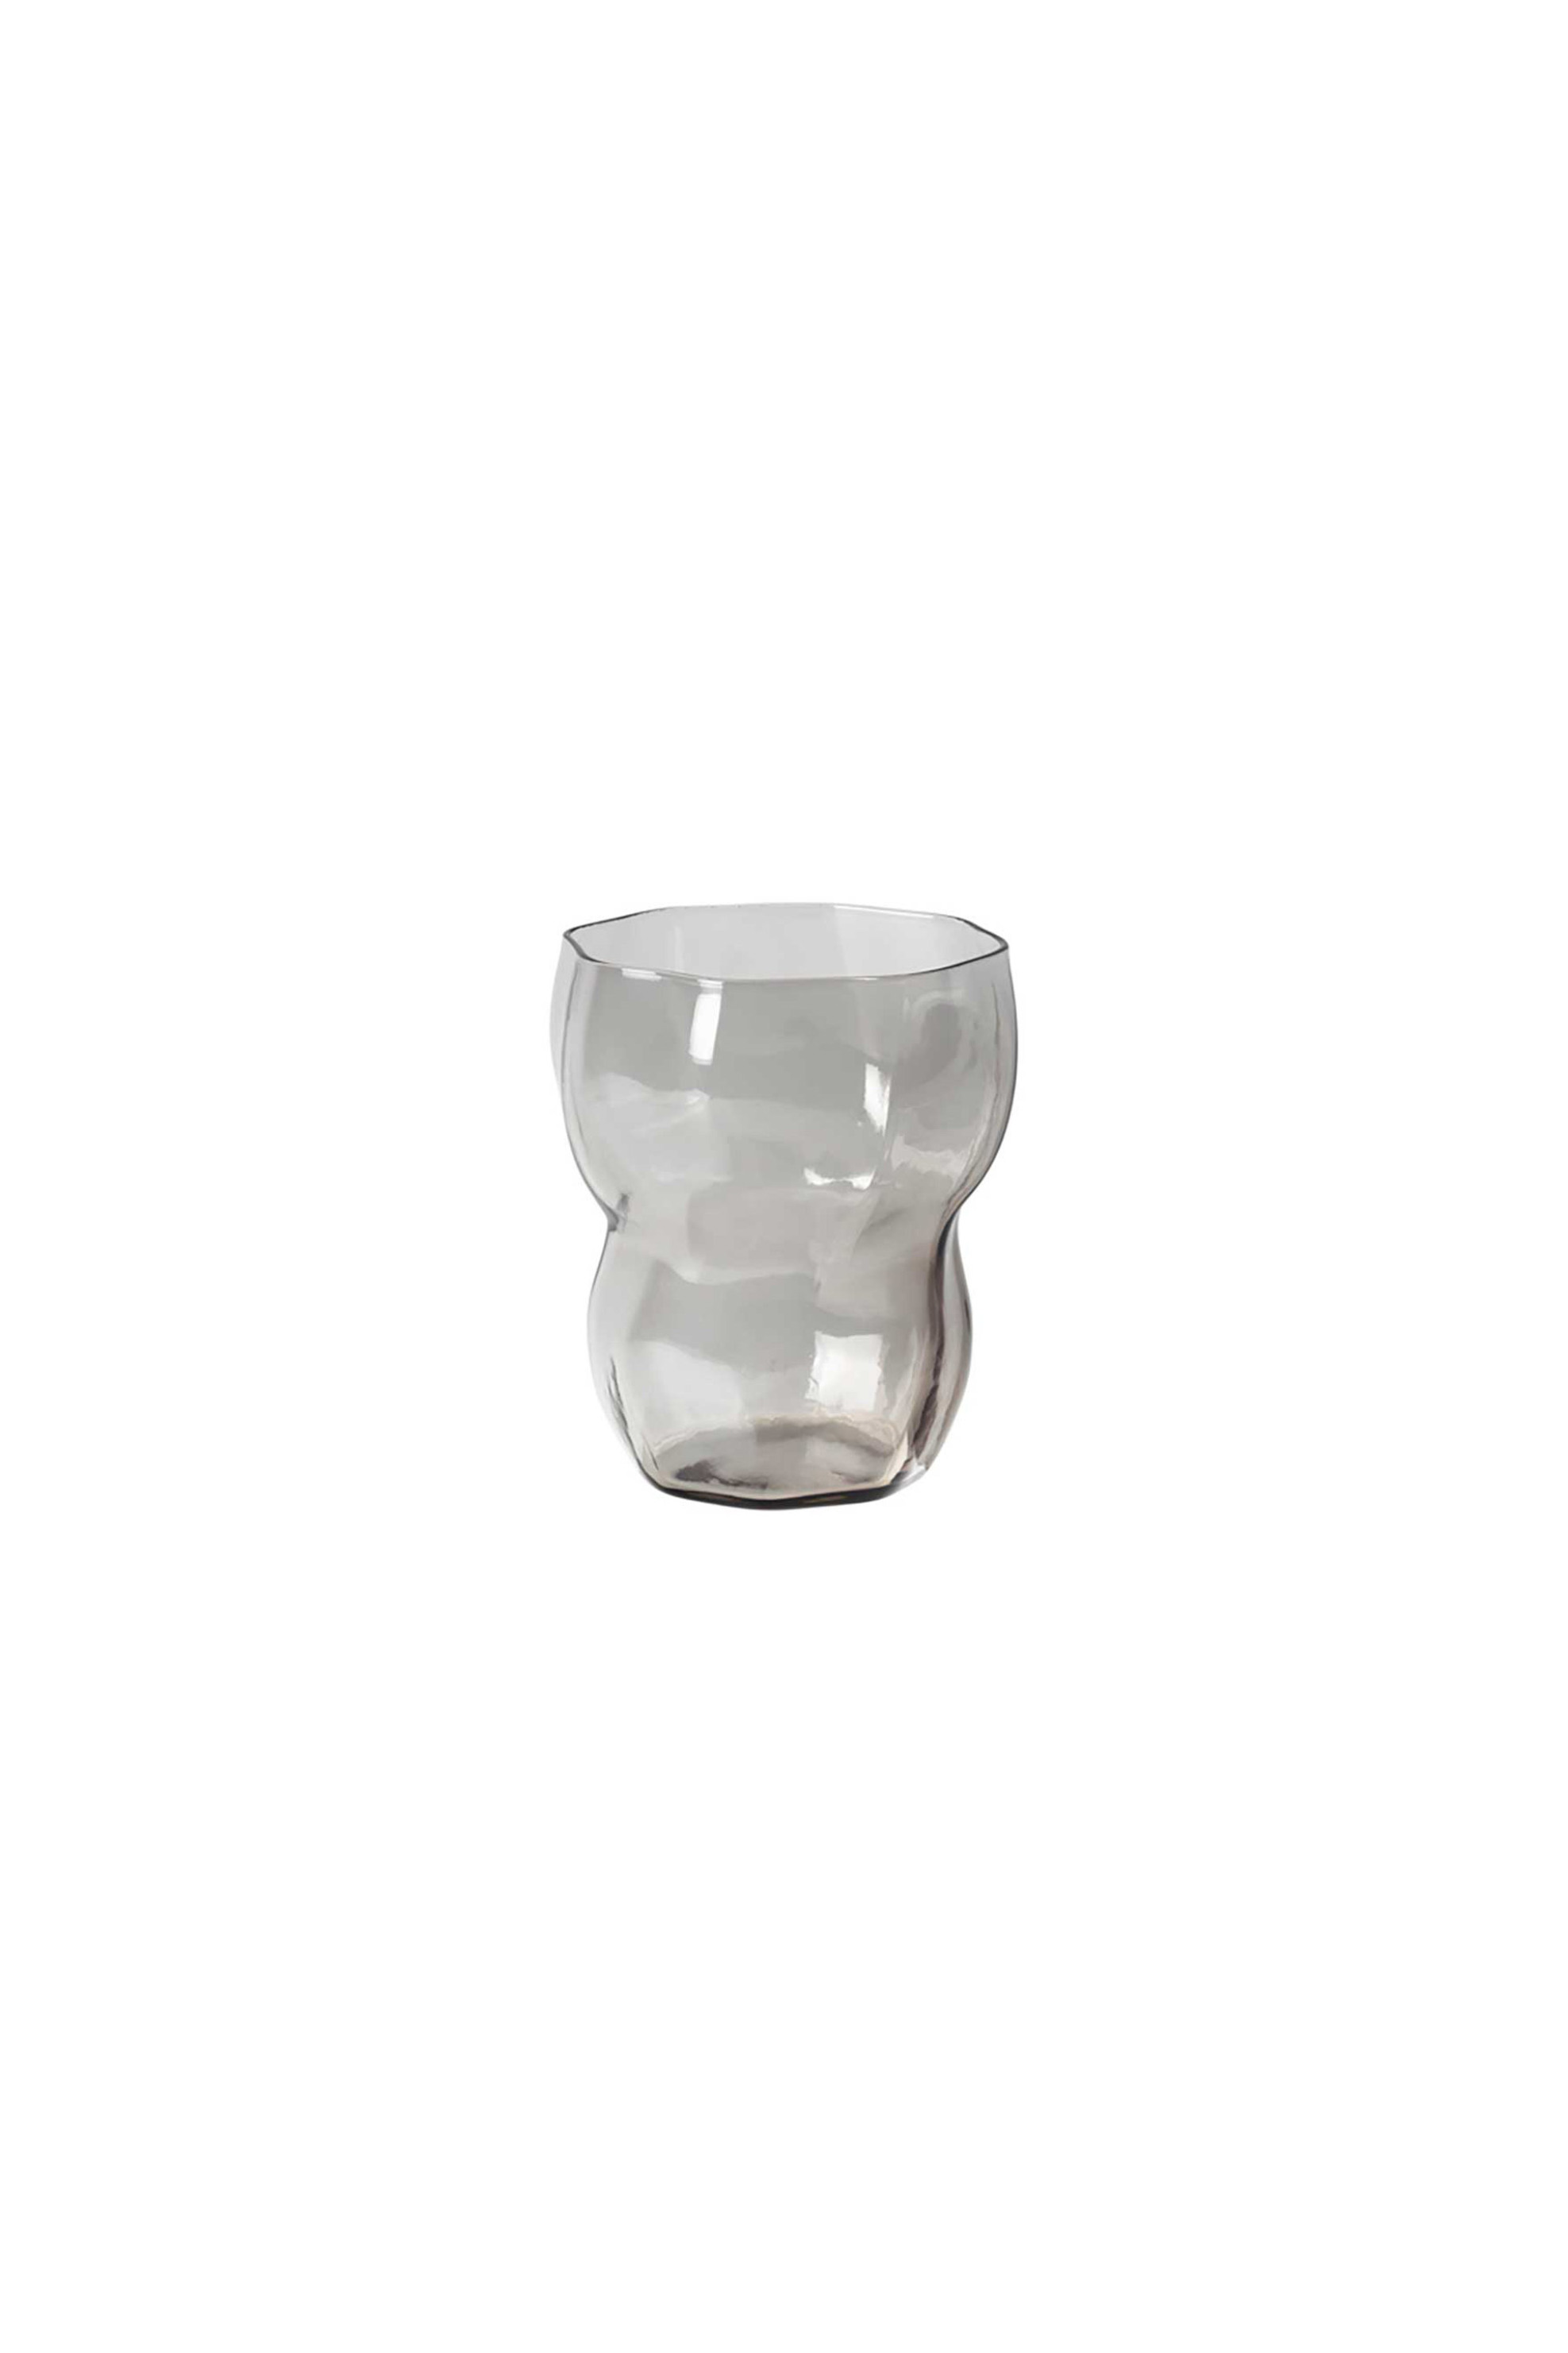 Home > ΚΟΥΖΙΝΑ > Υαλικά > Ποτήρια Broste Copenhagen γυάλινο ποτήρι νερού μονόχρωμο "Limfjord" 8,2 x 9,2 cm - 14496227 Γκρι